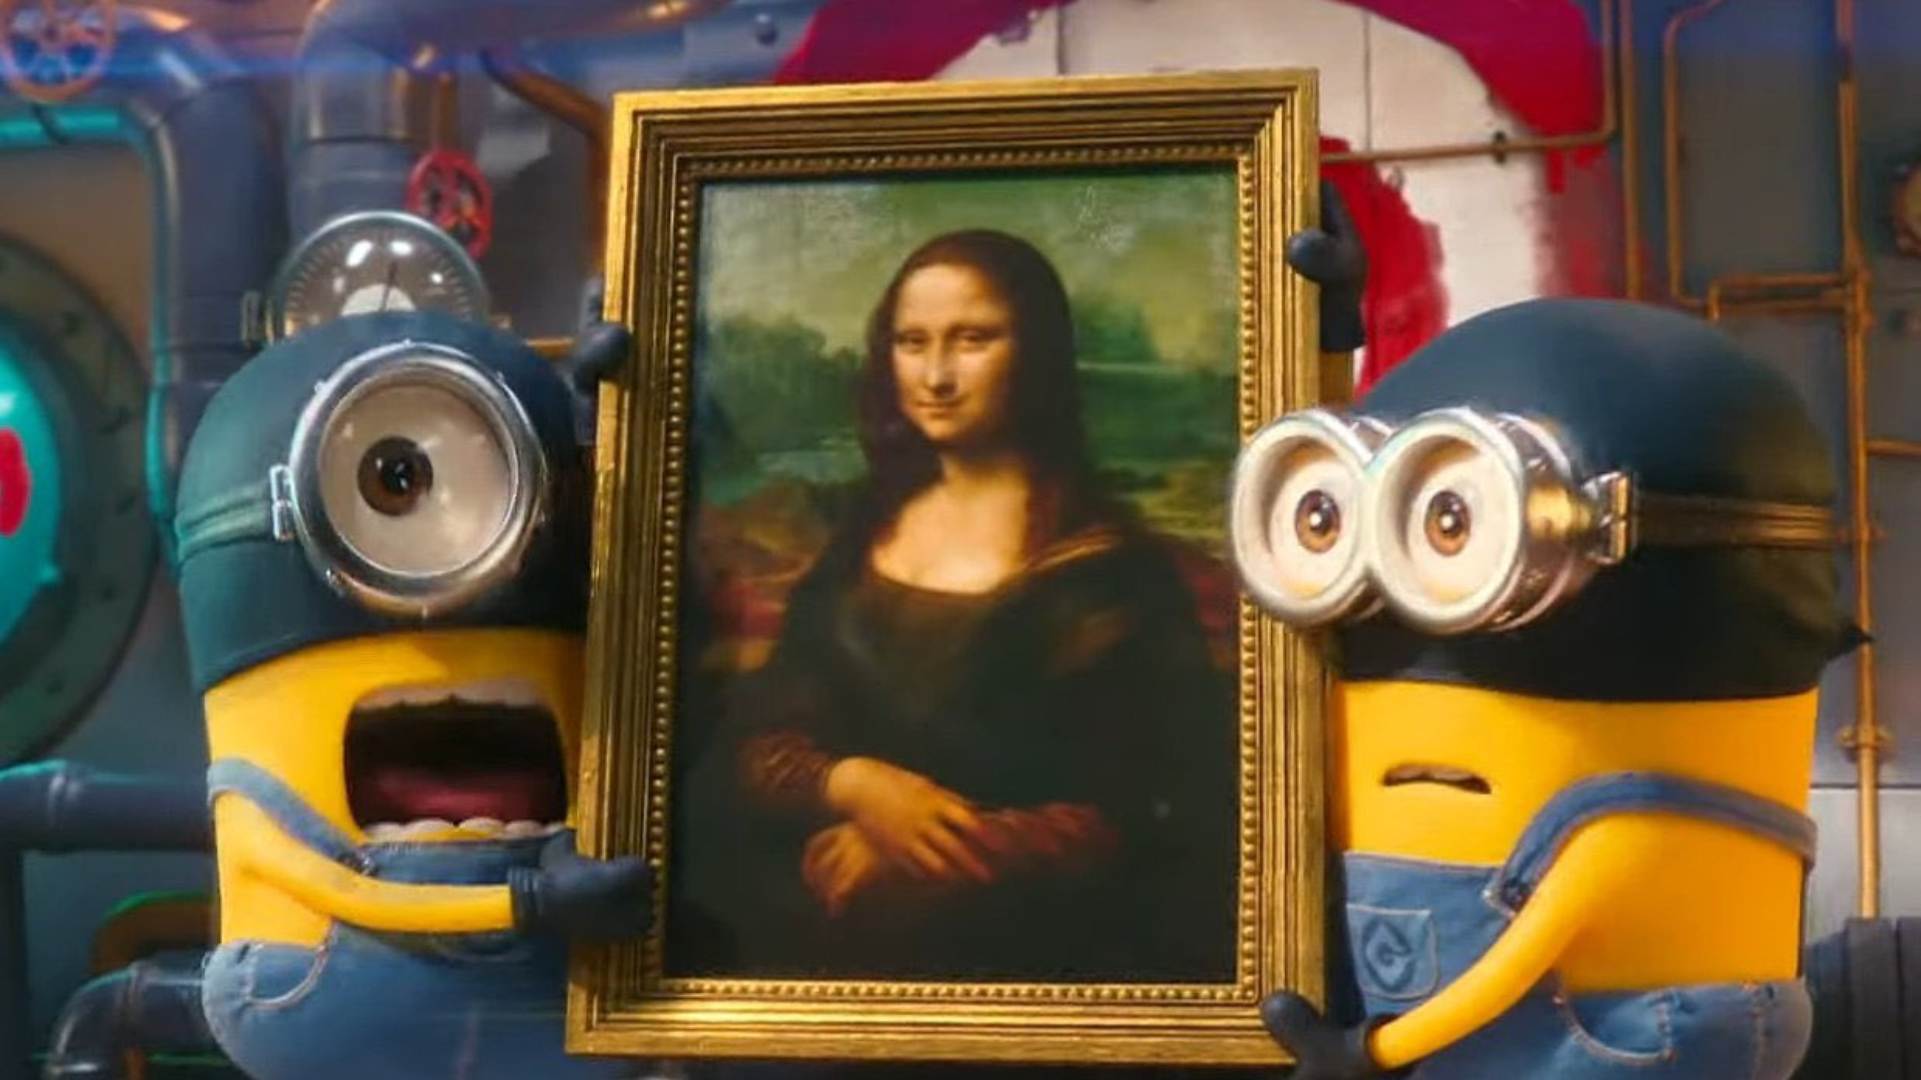 Minions roubam a Mona Lisa na abertura das Olimpíadas de 2024! Assista